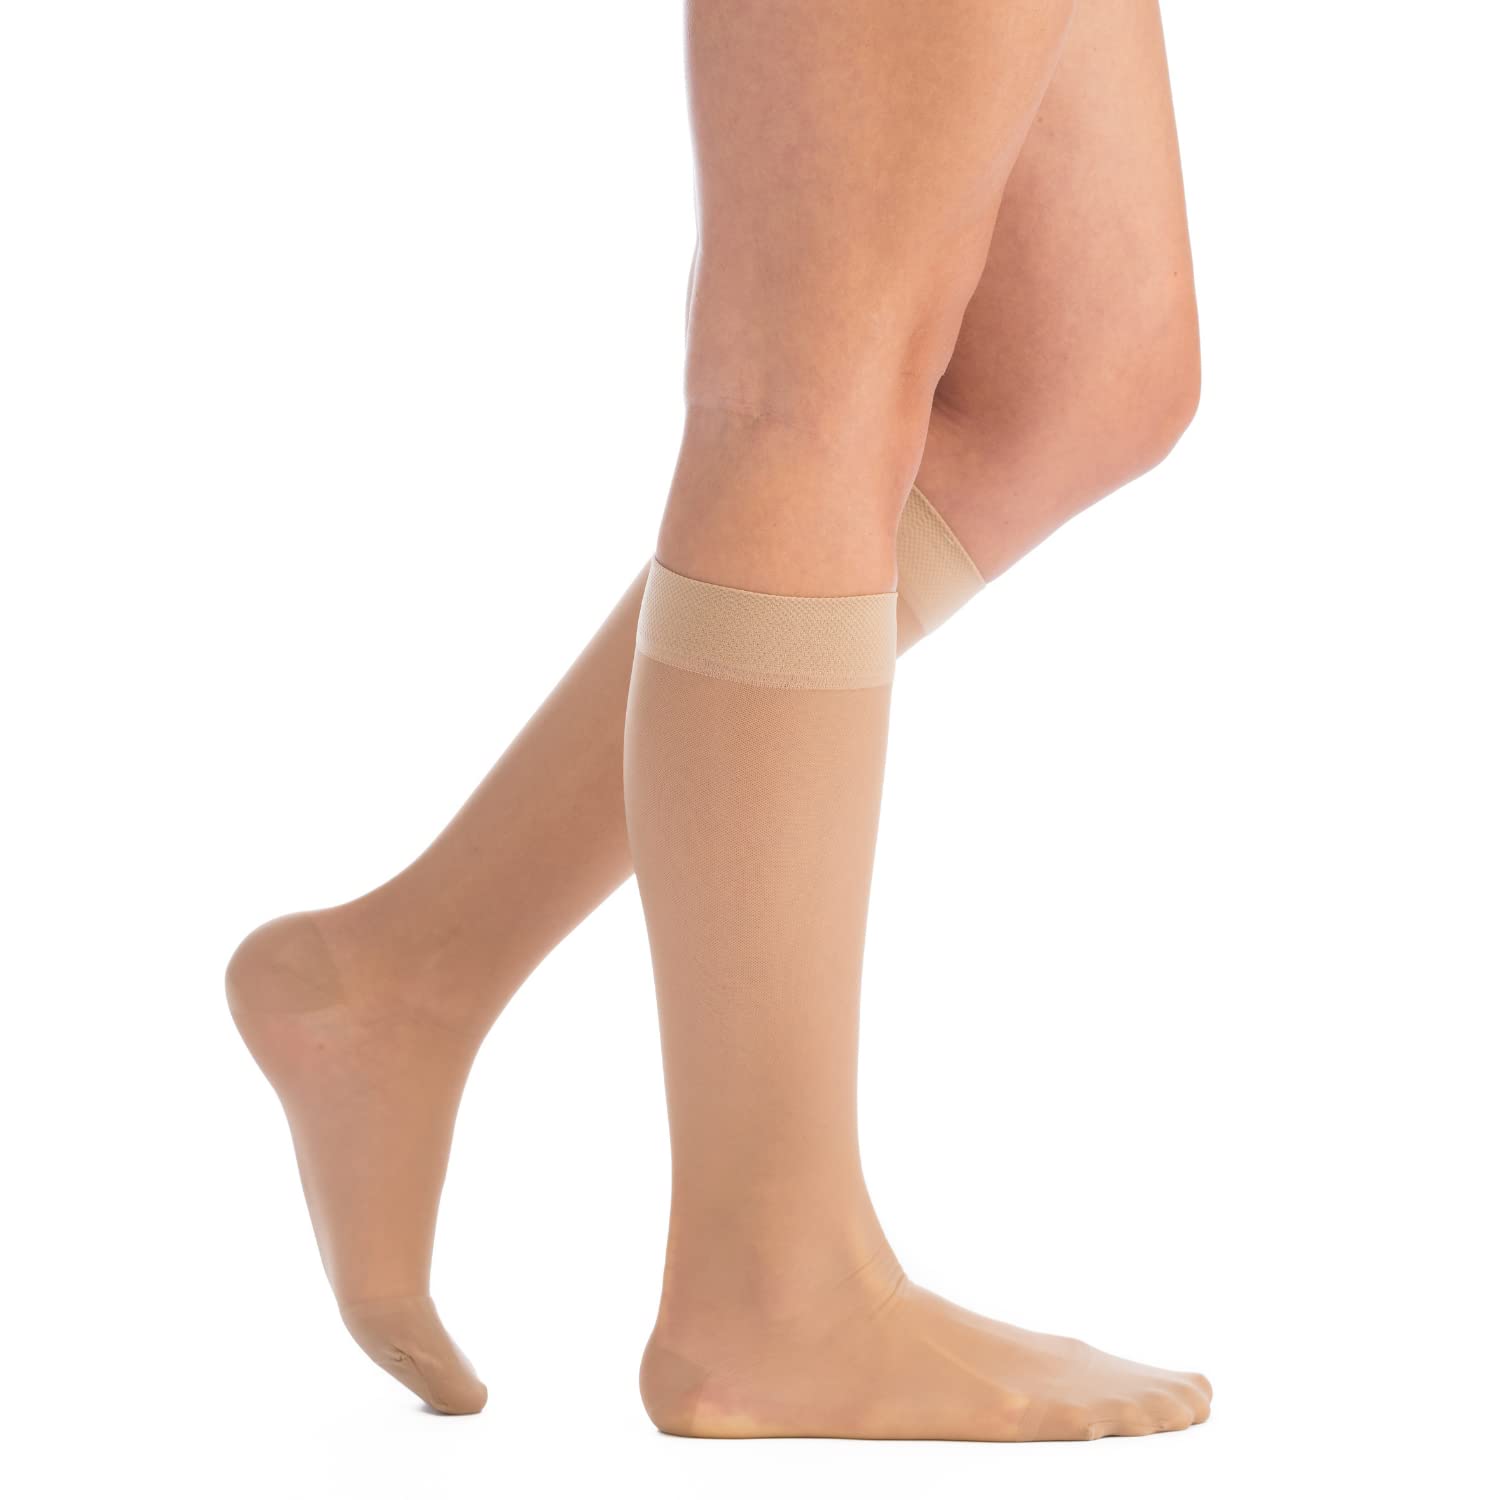 EvoNation Women’s Knee High 8-15 mmHg Sheer Graduated Compression Socks – Mild Pressure Compression Garment